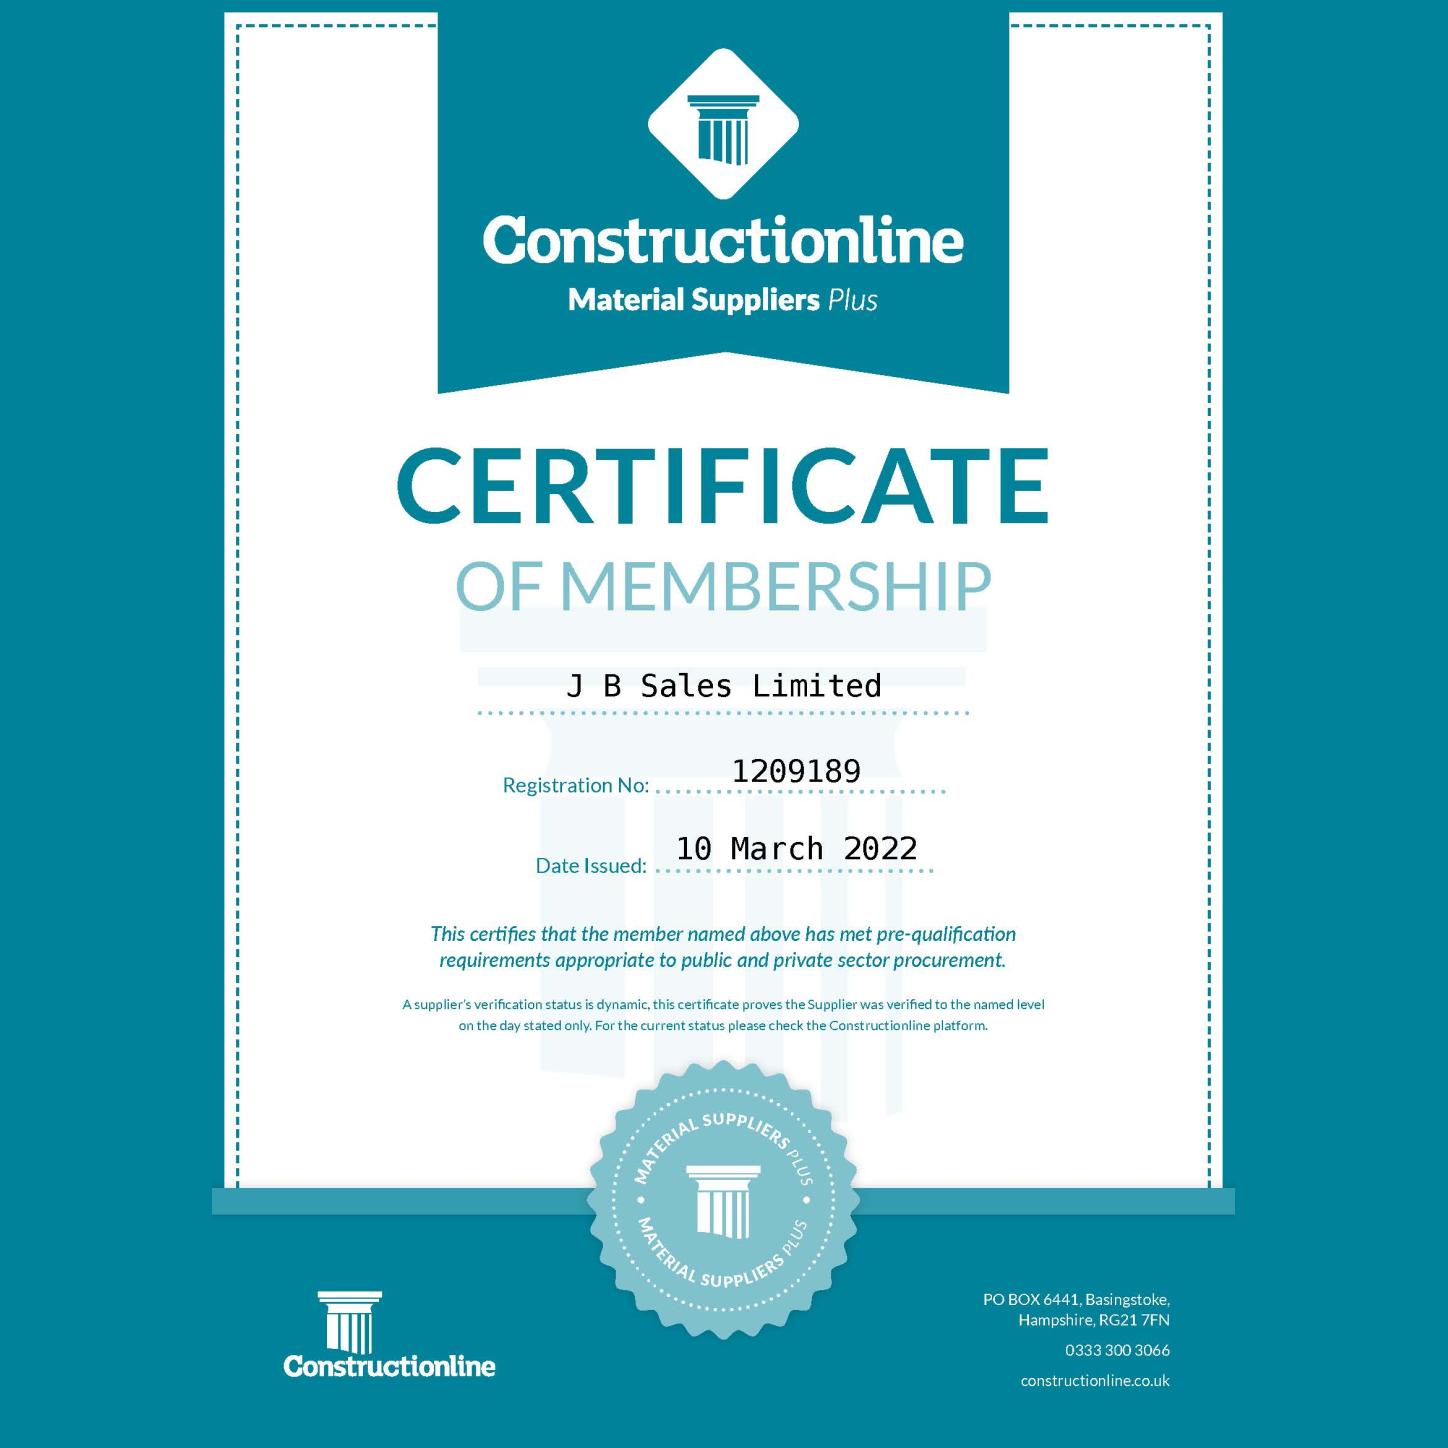 Constructionline Materials Plus Certificate of Membership